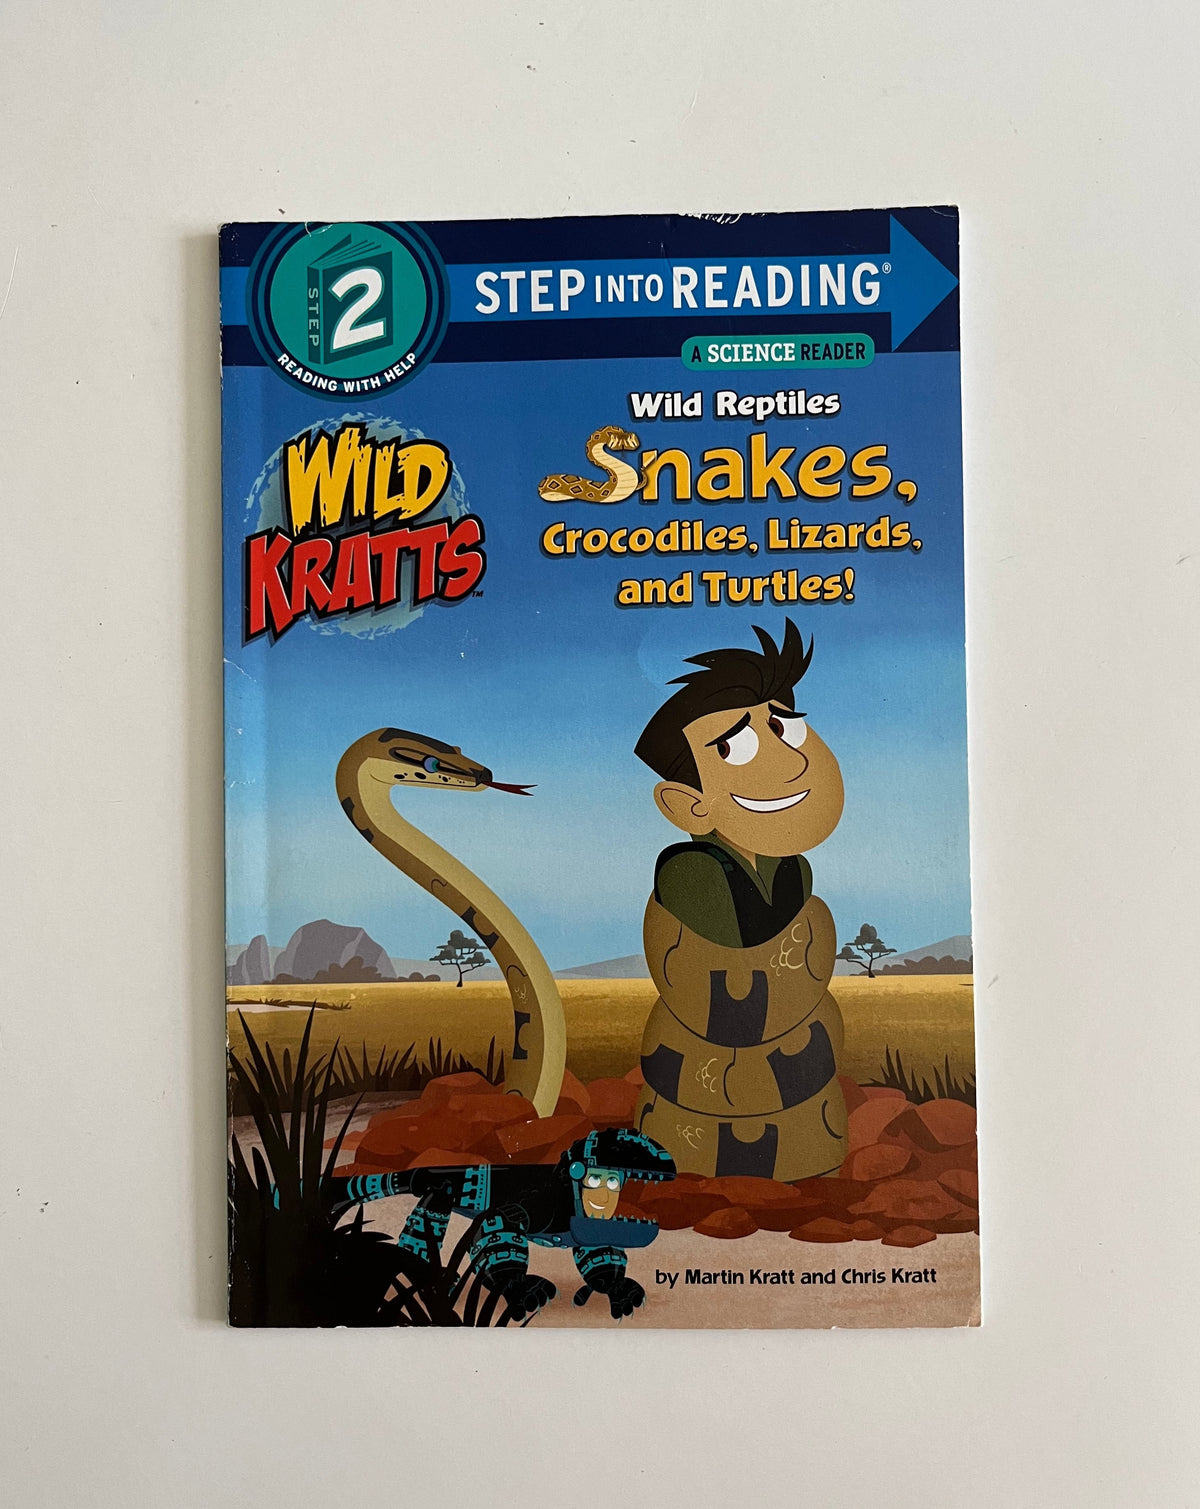 Wild Kratts: Wild Reptiles by the Kratt Brothers